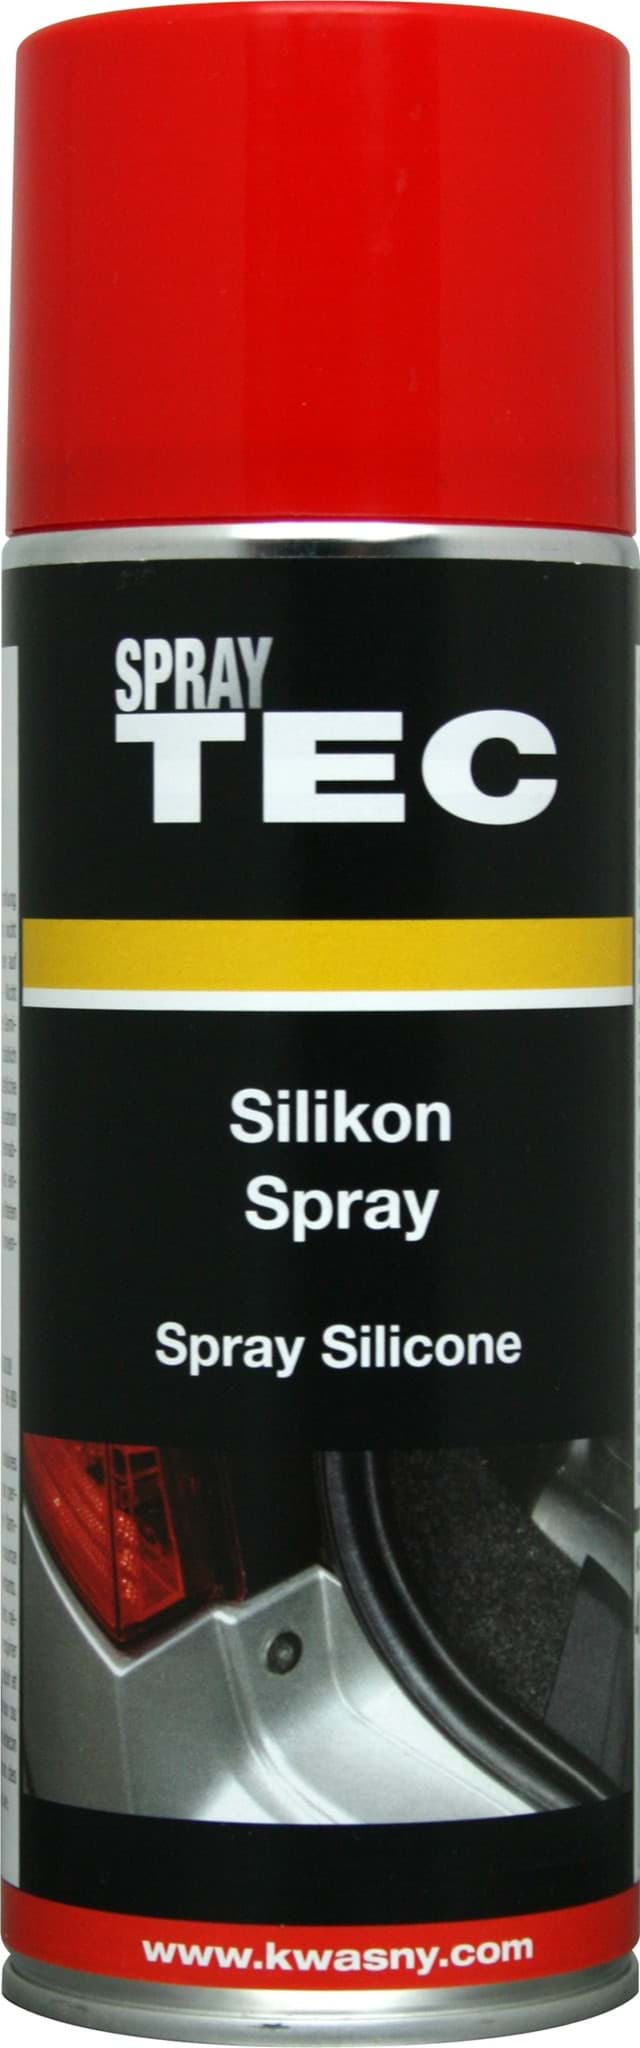 Obraz Silikon-Spray 400ml SprayTEC 235001